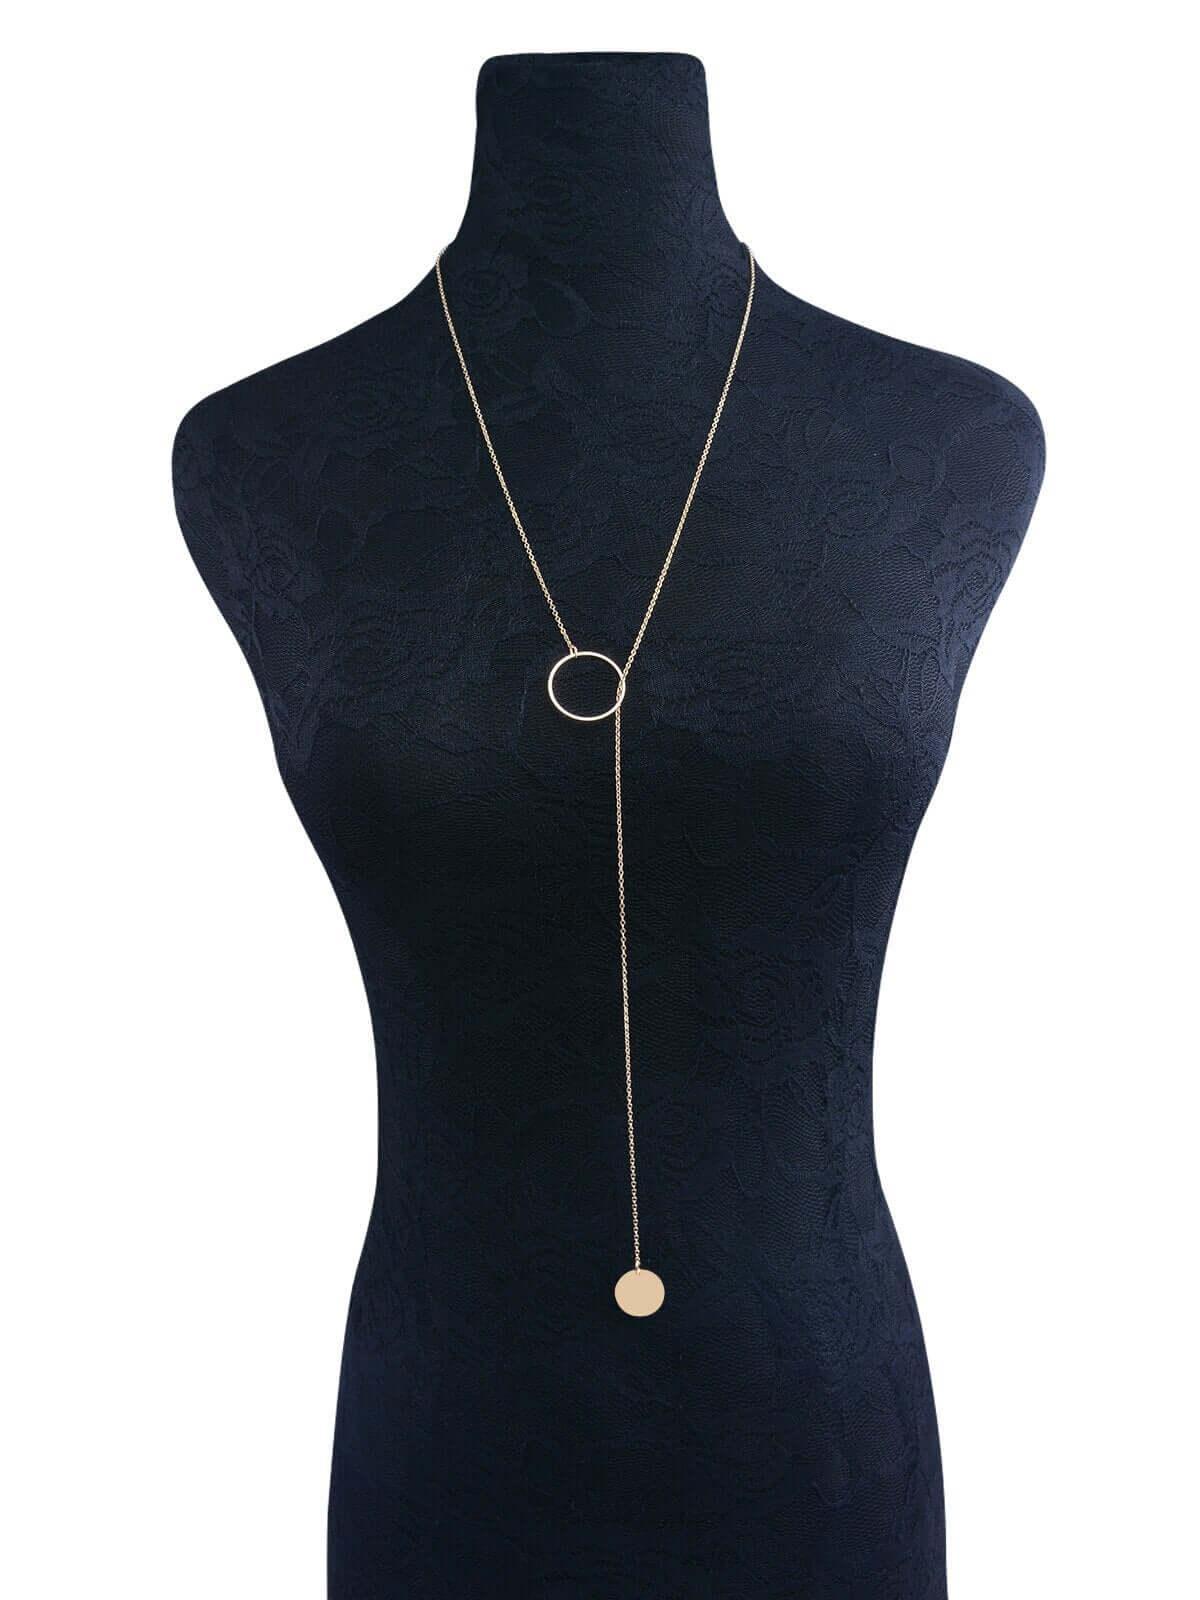 Collier strass fin long avec pendentif pour femmes - EMAKUJITIA